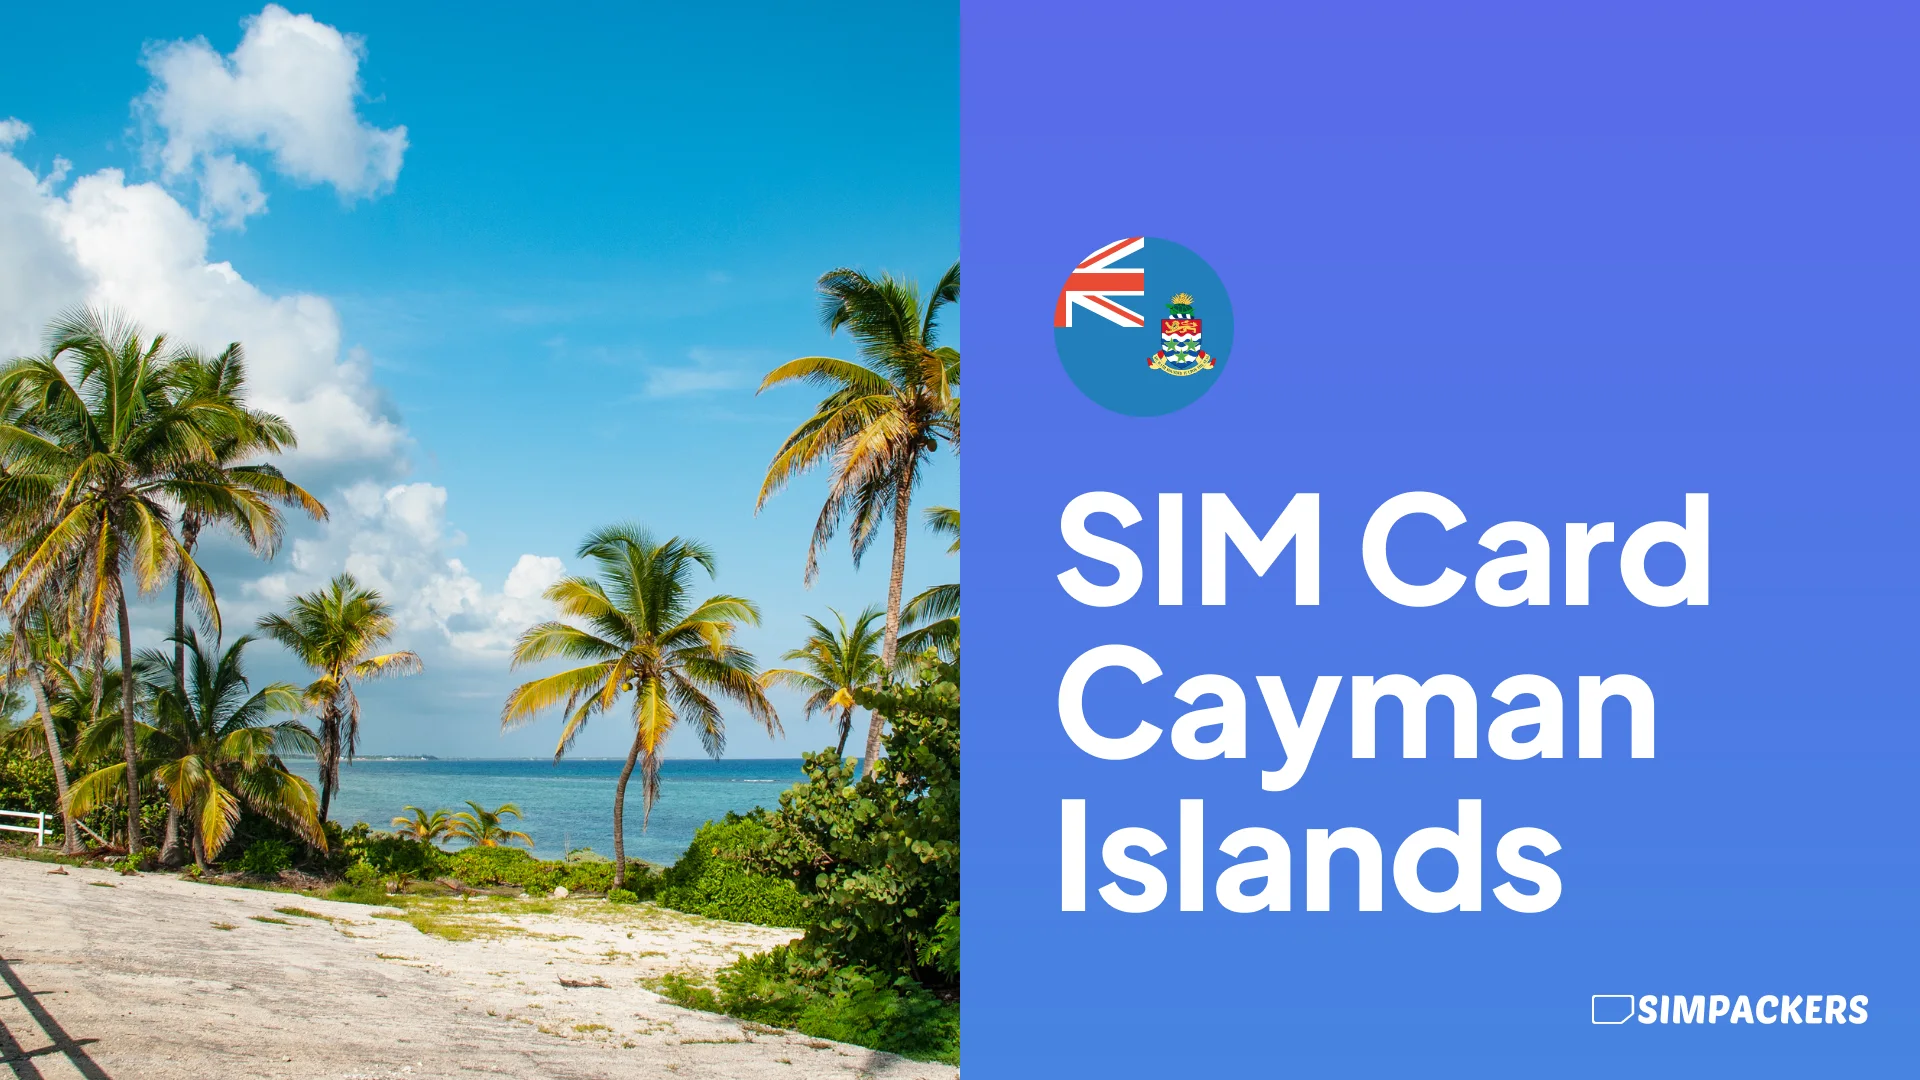 EN/FEATURED_IMAGES/sim-card-cayman-islands.webp